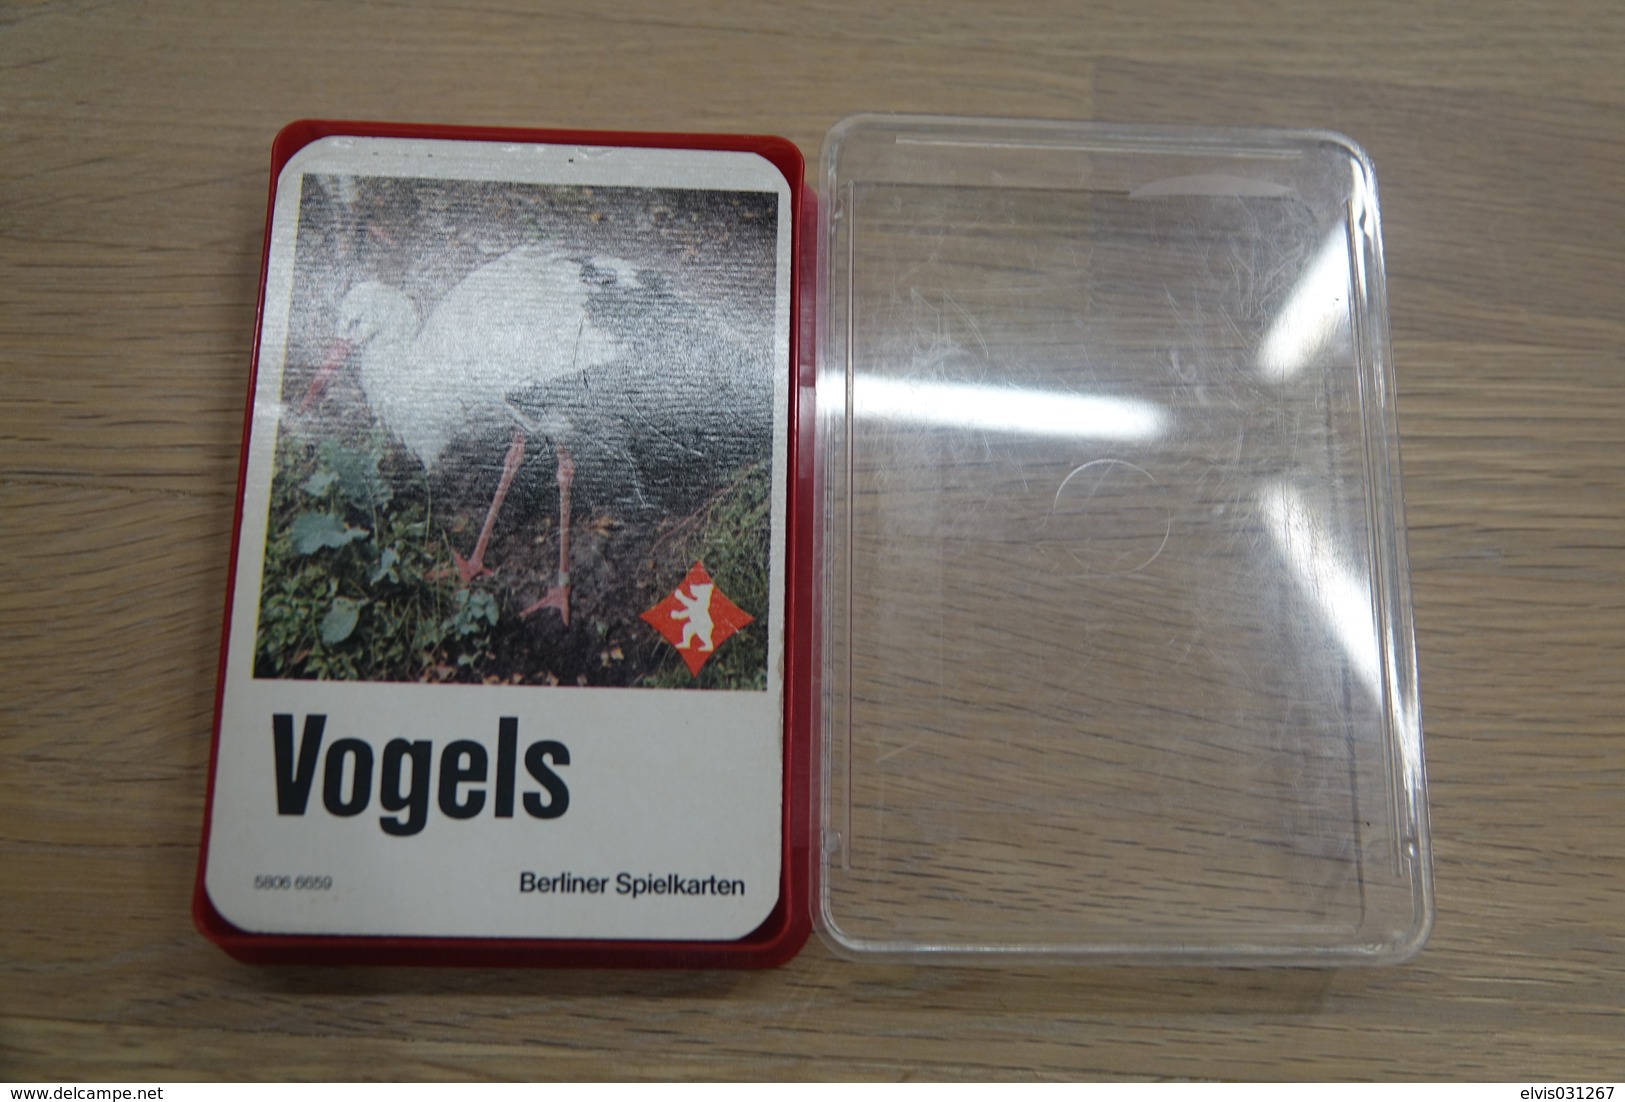 Speelkaarten - Kwartet, Vogels, Quartett 5806 6659, Berliner Spielkarten, *** - - Kartenspiele (traditionell)